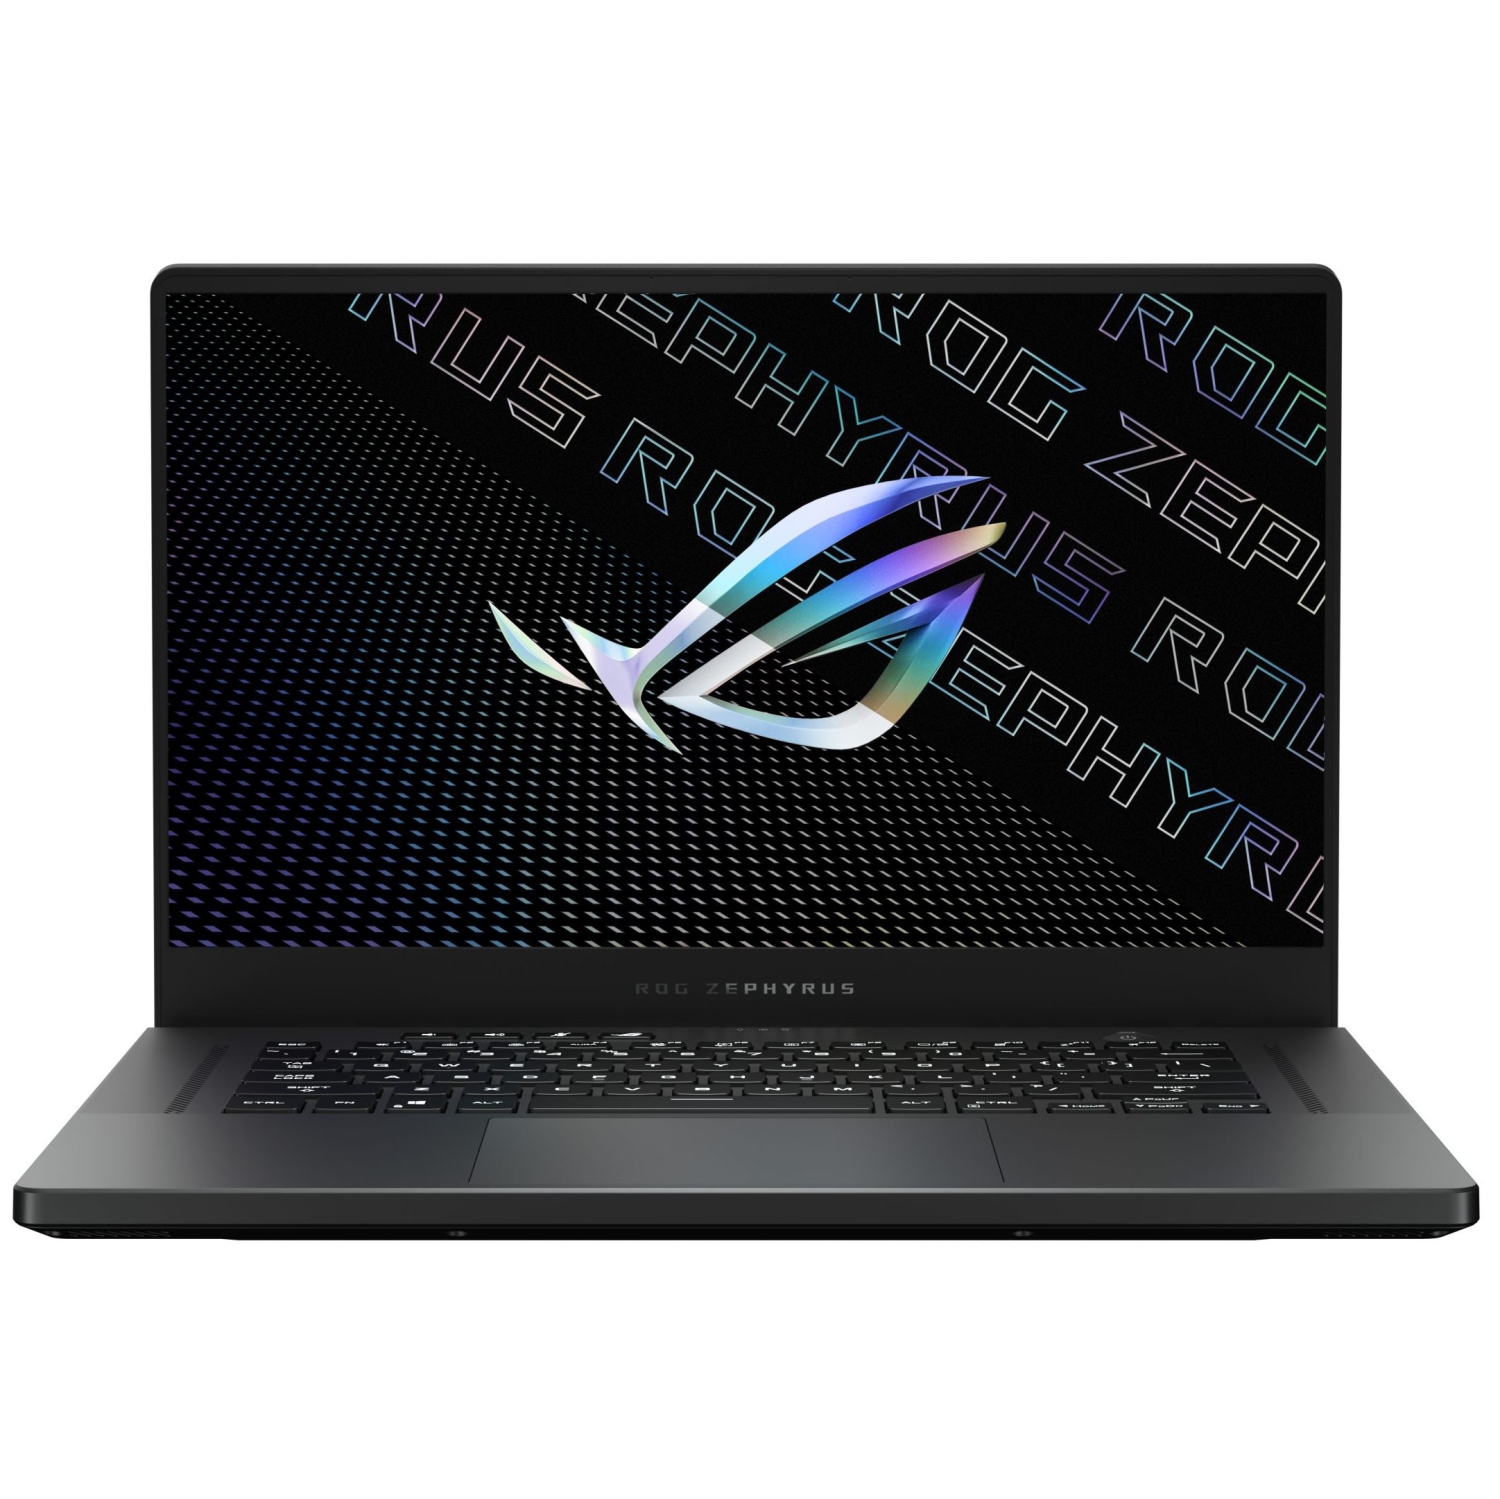 Custom ASUS ROG Zephyrus G15 Laptop (AMD Ryzen 9 5900HS, 16GB RAM, 2x2TB PCIe SSD RAID 0 (4TB), NVIDIA RTX 3070, Win 10 Pro)